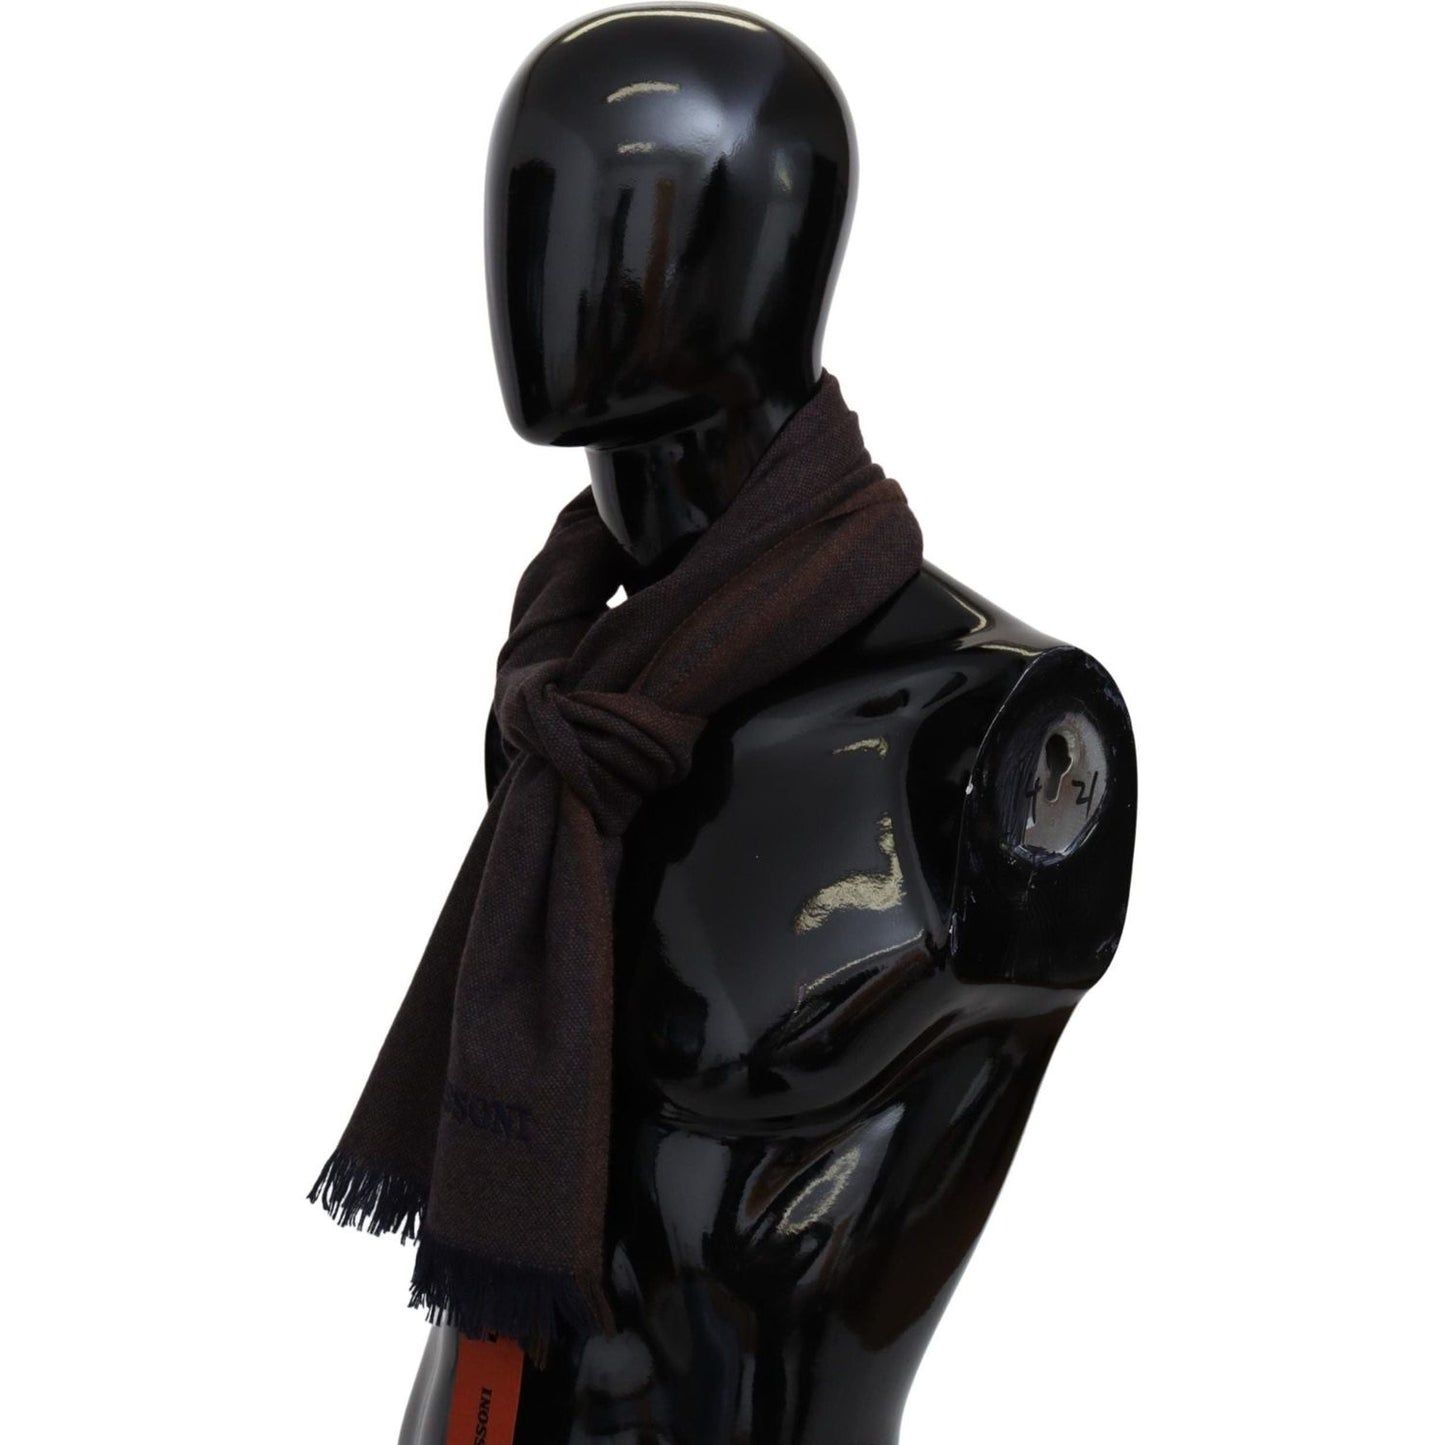 Missoni Luxurious Cashmere Unisex Scarf in Brown brown-100-cashmere-unisex-scarf